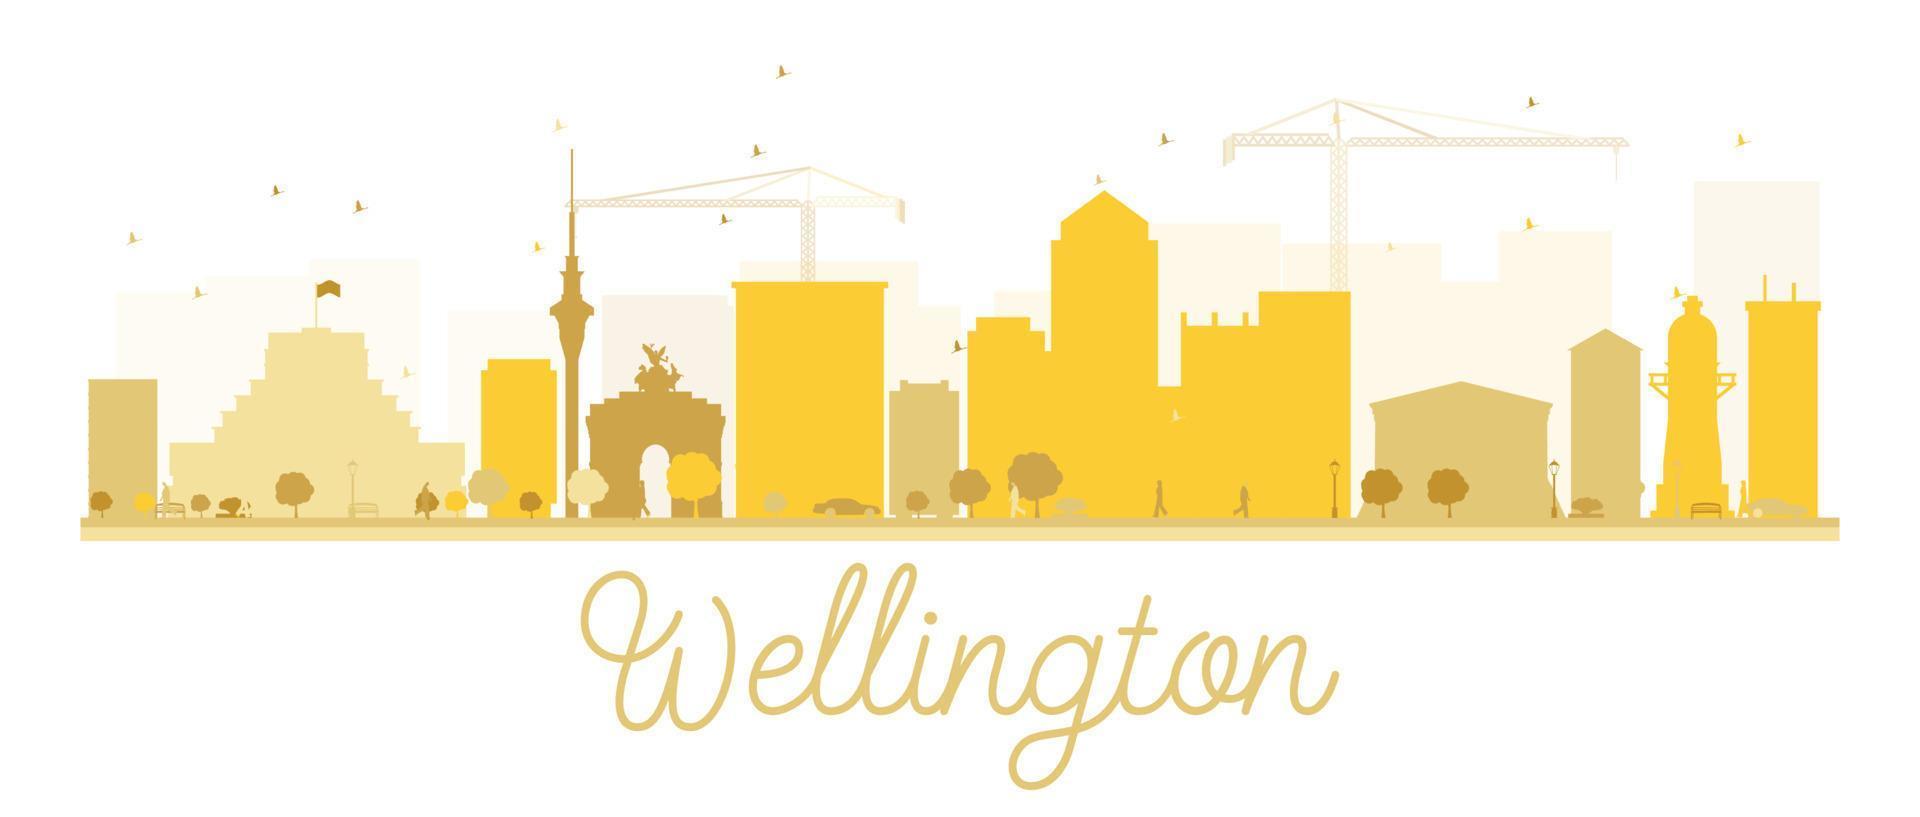 Wellington City skyline golden silhouette. vector